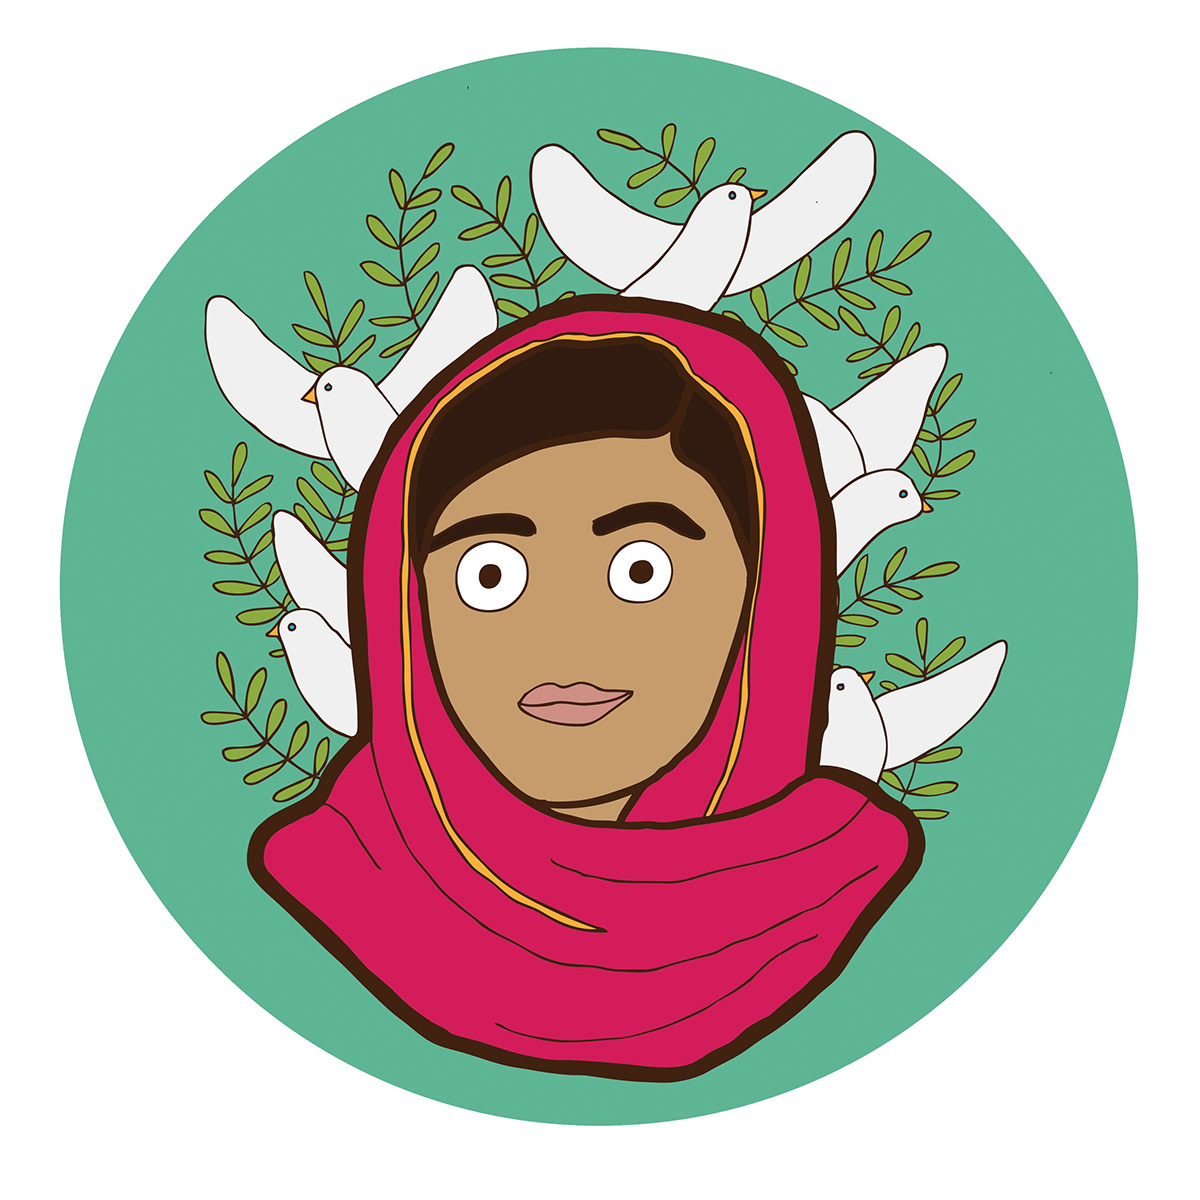 malala yousafzai winner of the Nobel Peace Prize.